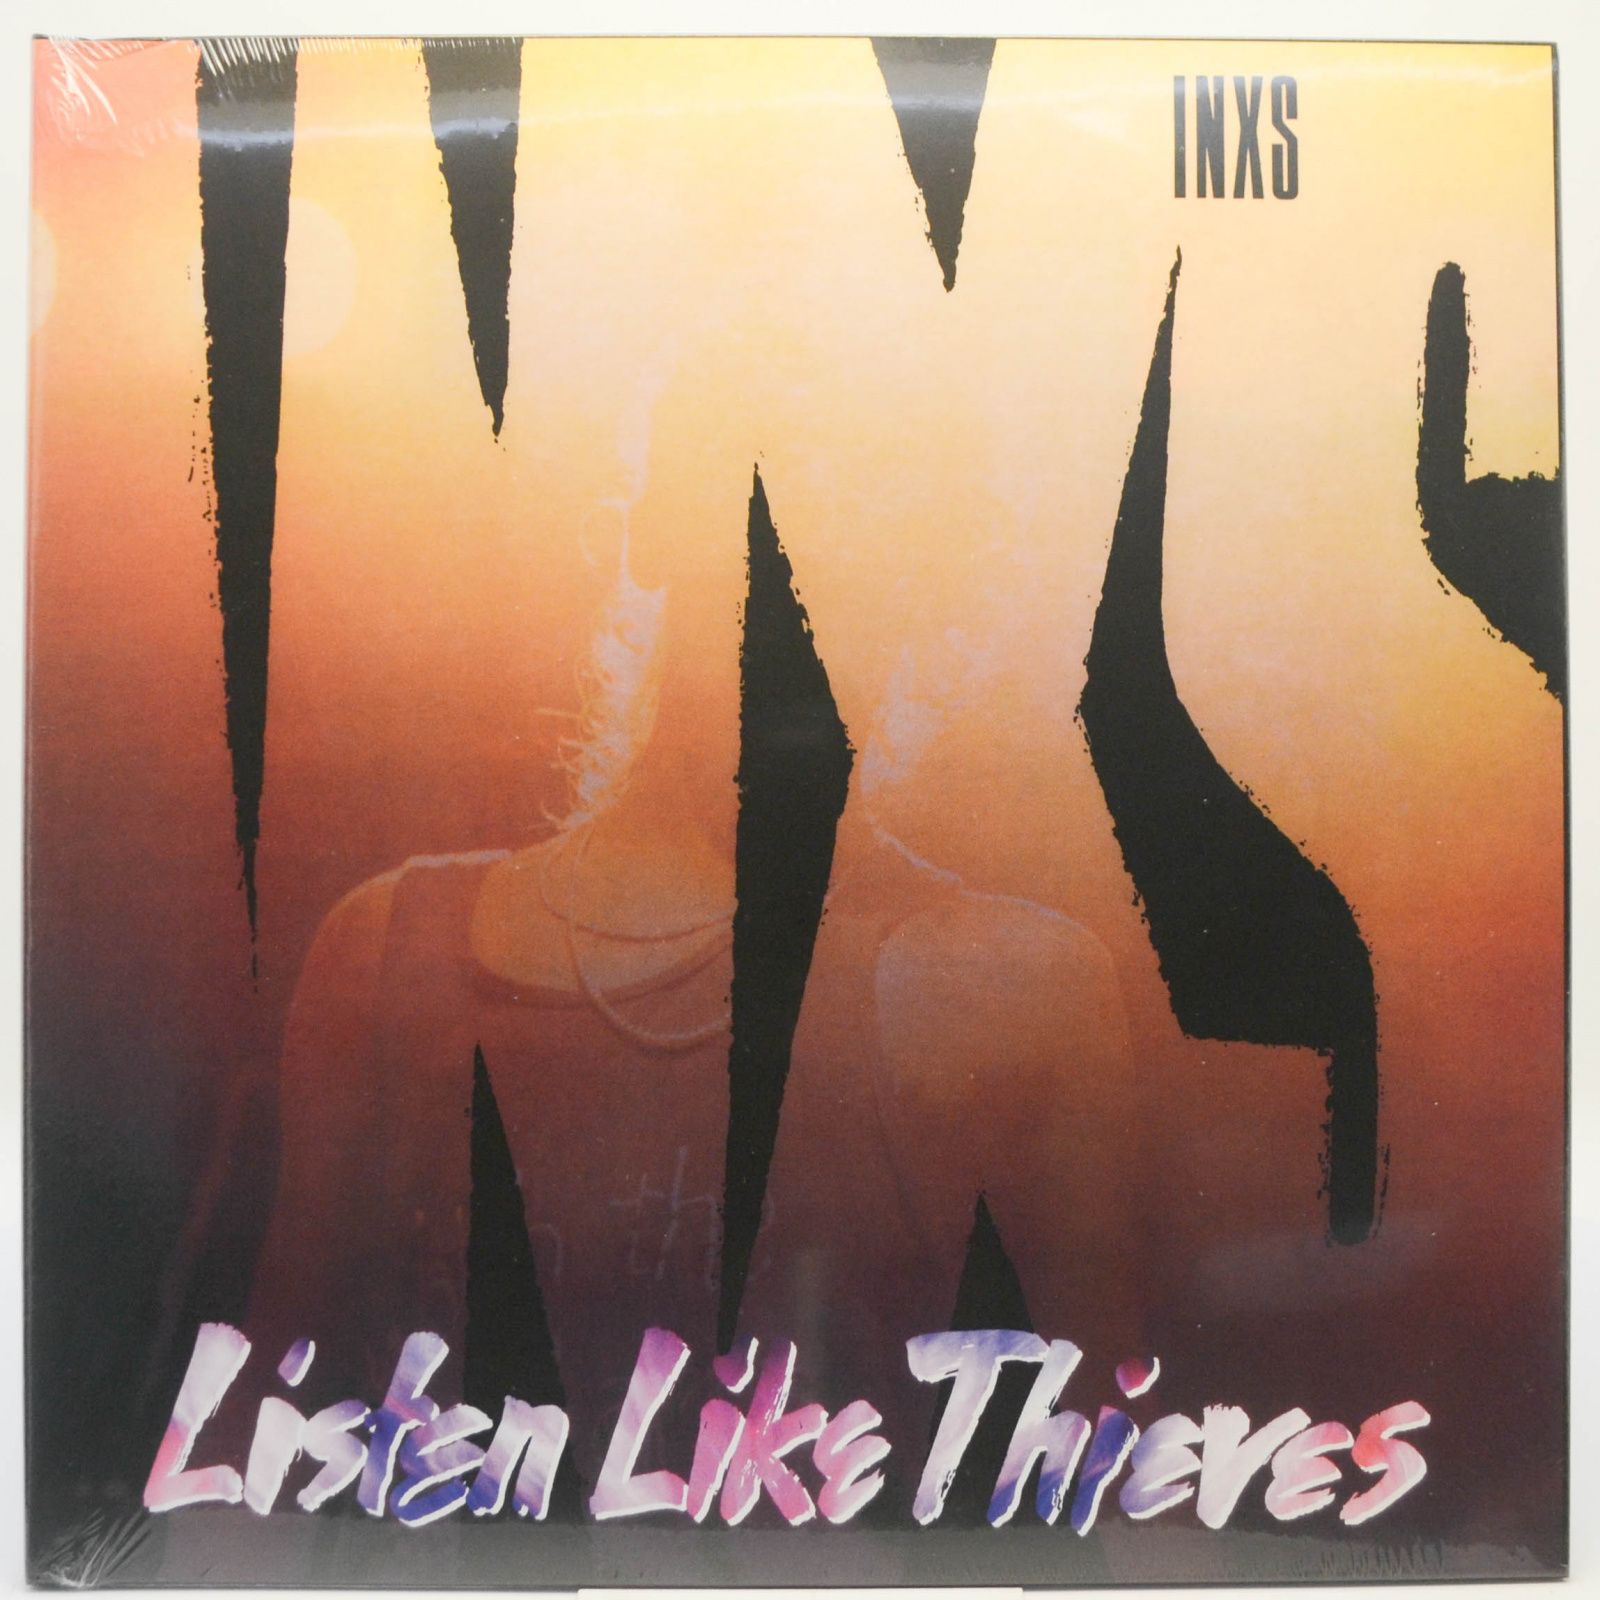 INXS — Listen Like Thieves, 1985